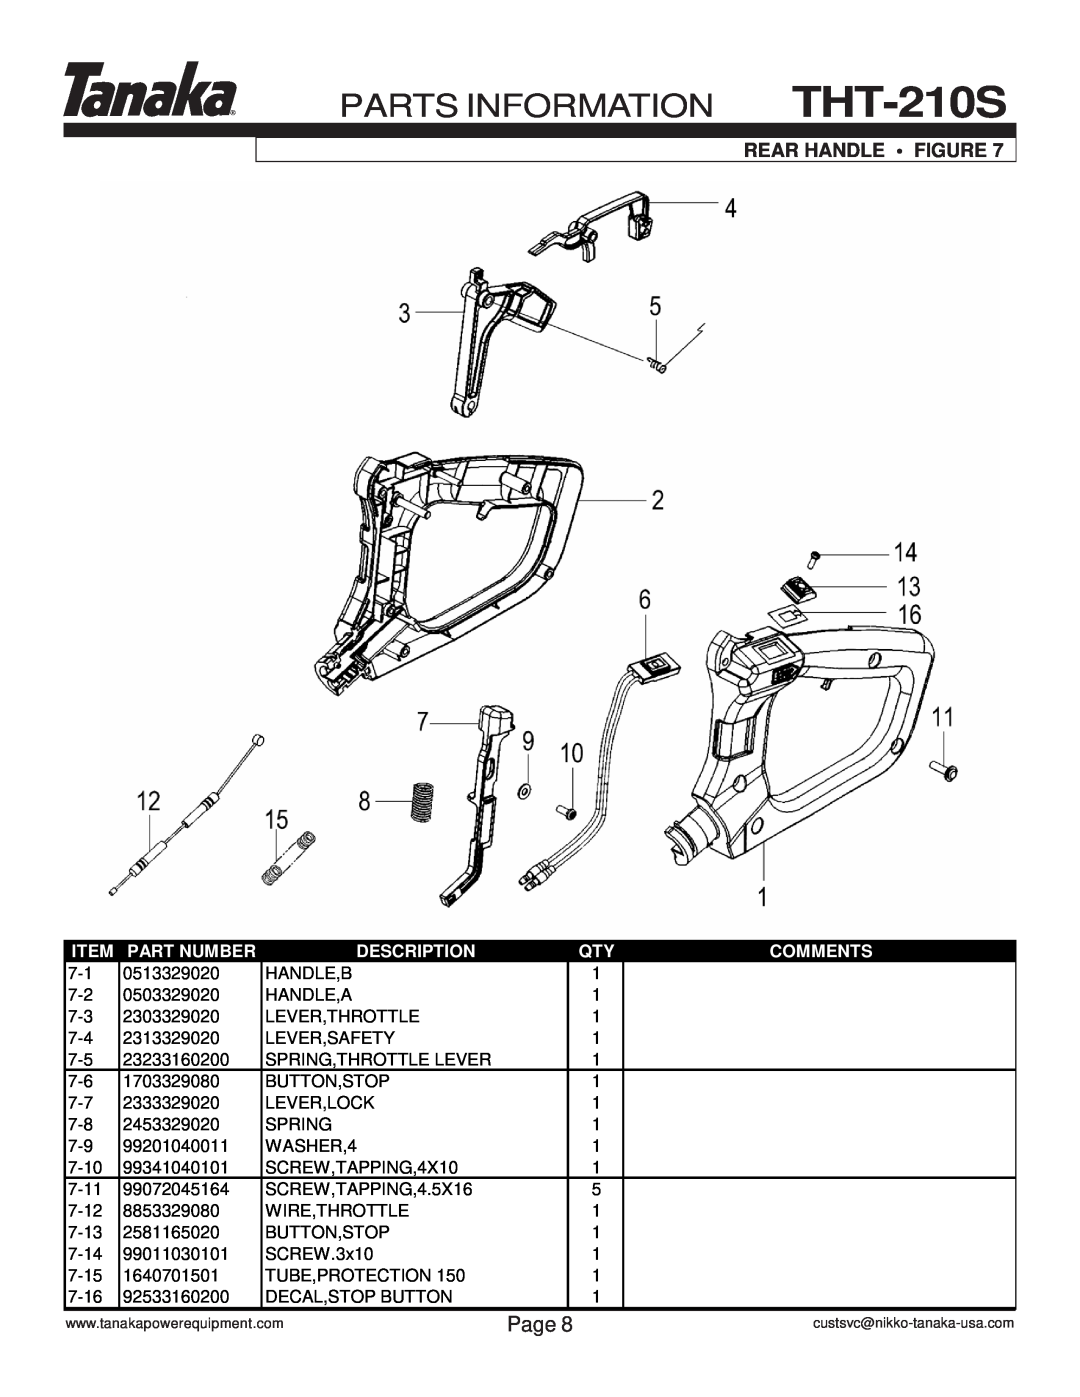 Tanaka manual Rear Handle • Figure, PARTS INFORMATION THT-210S, Page, Item, Part Number, Description, Comments 